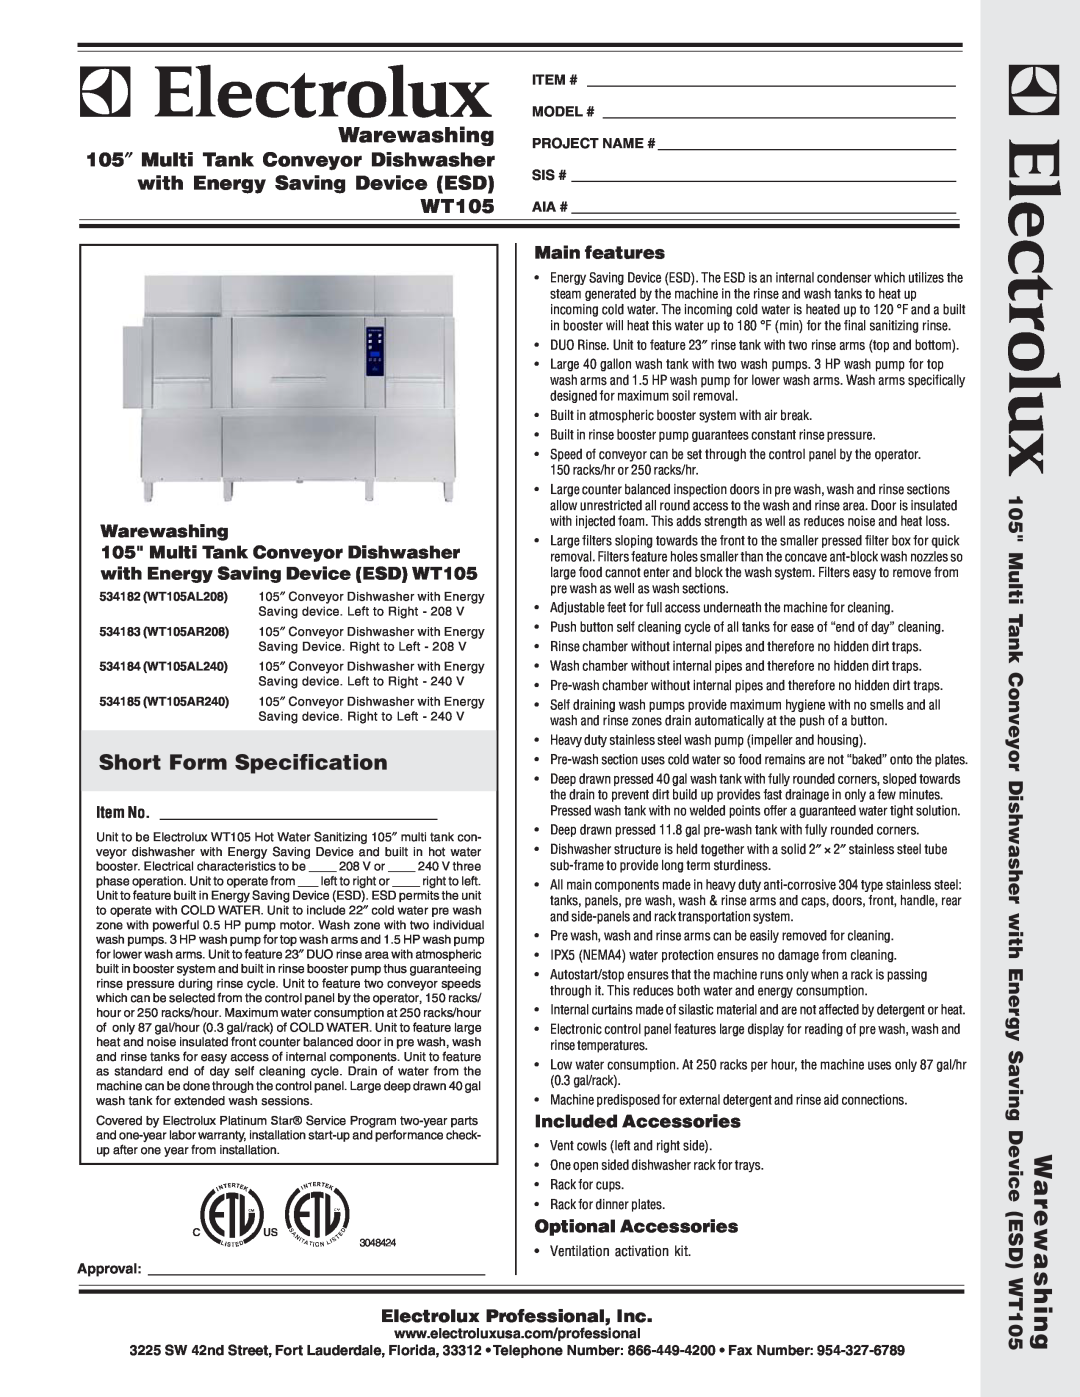 Electrolux WT105AL240 warranty Warewashing, Short Form Specification, 105″ Multi Tank Conveyor Dishwasher, Main features 